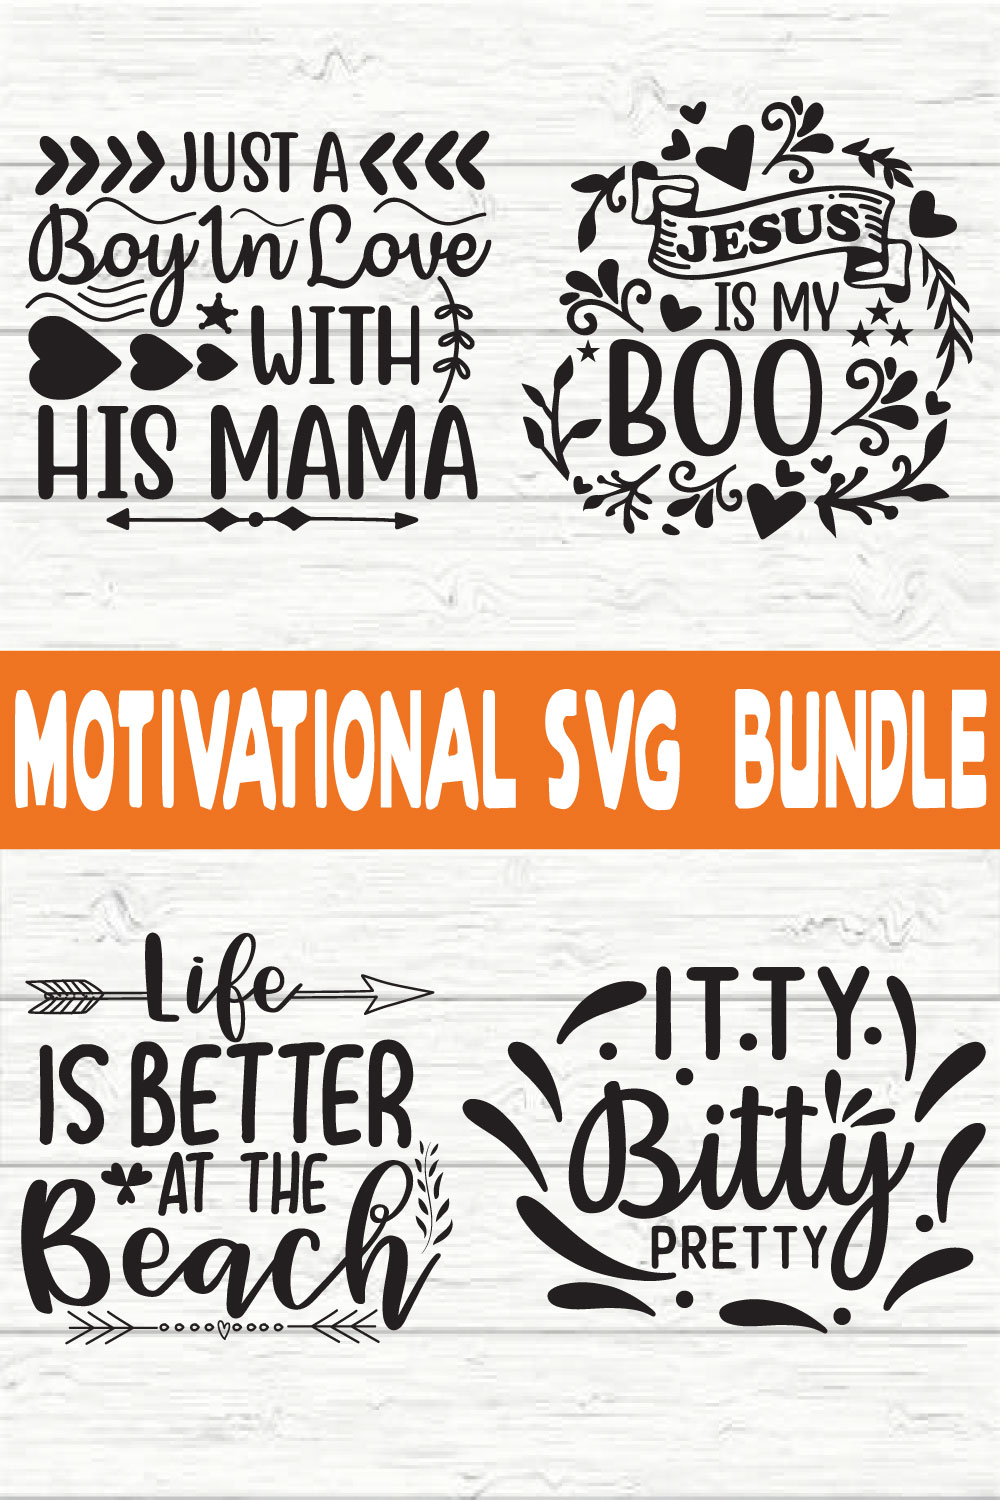 Motivational Typography Design Bundle vol 25 pinterest preview image.